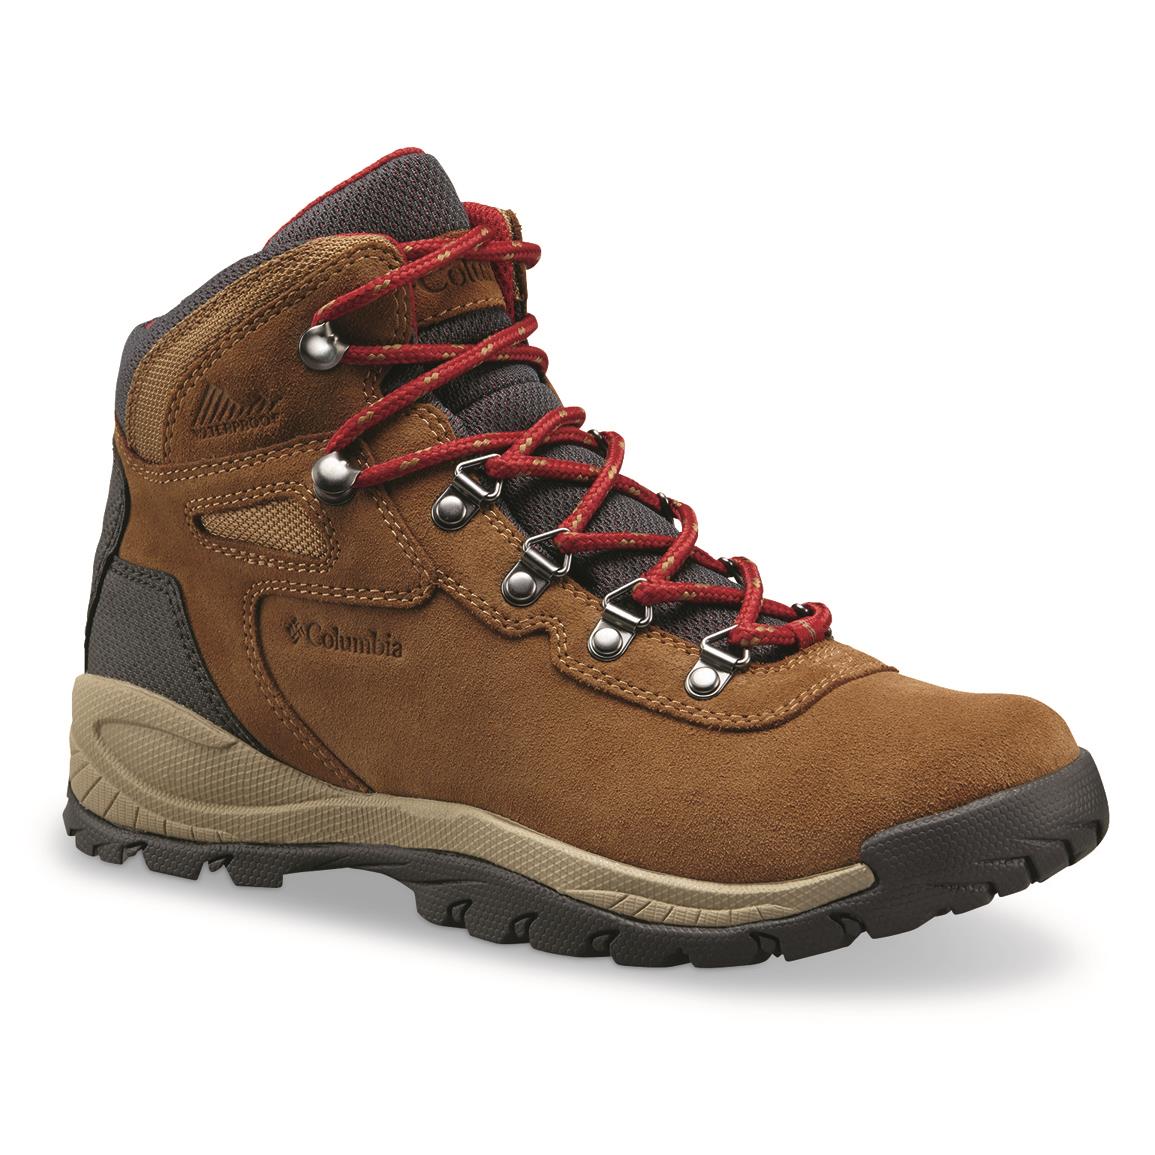 Columbia Women's Newton Ridge Plus Waterproof Hiking Boots - 704681, Hiking Boots & Shoes at 